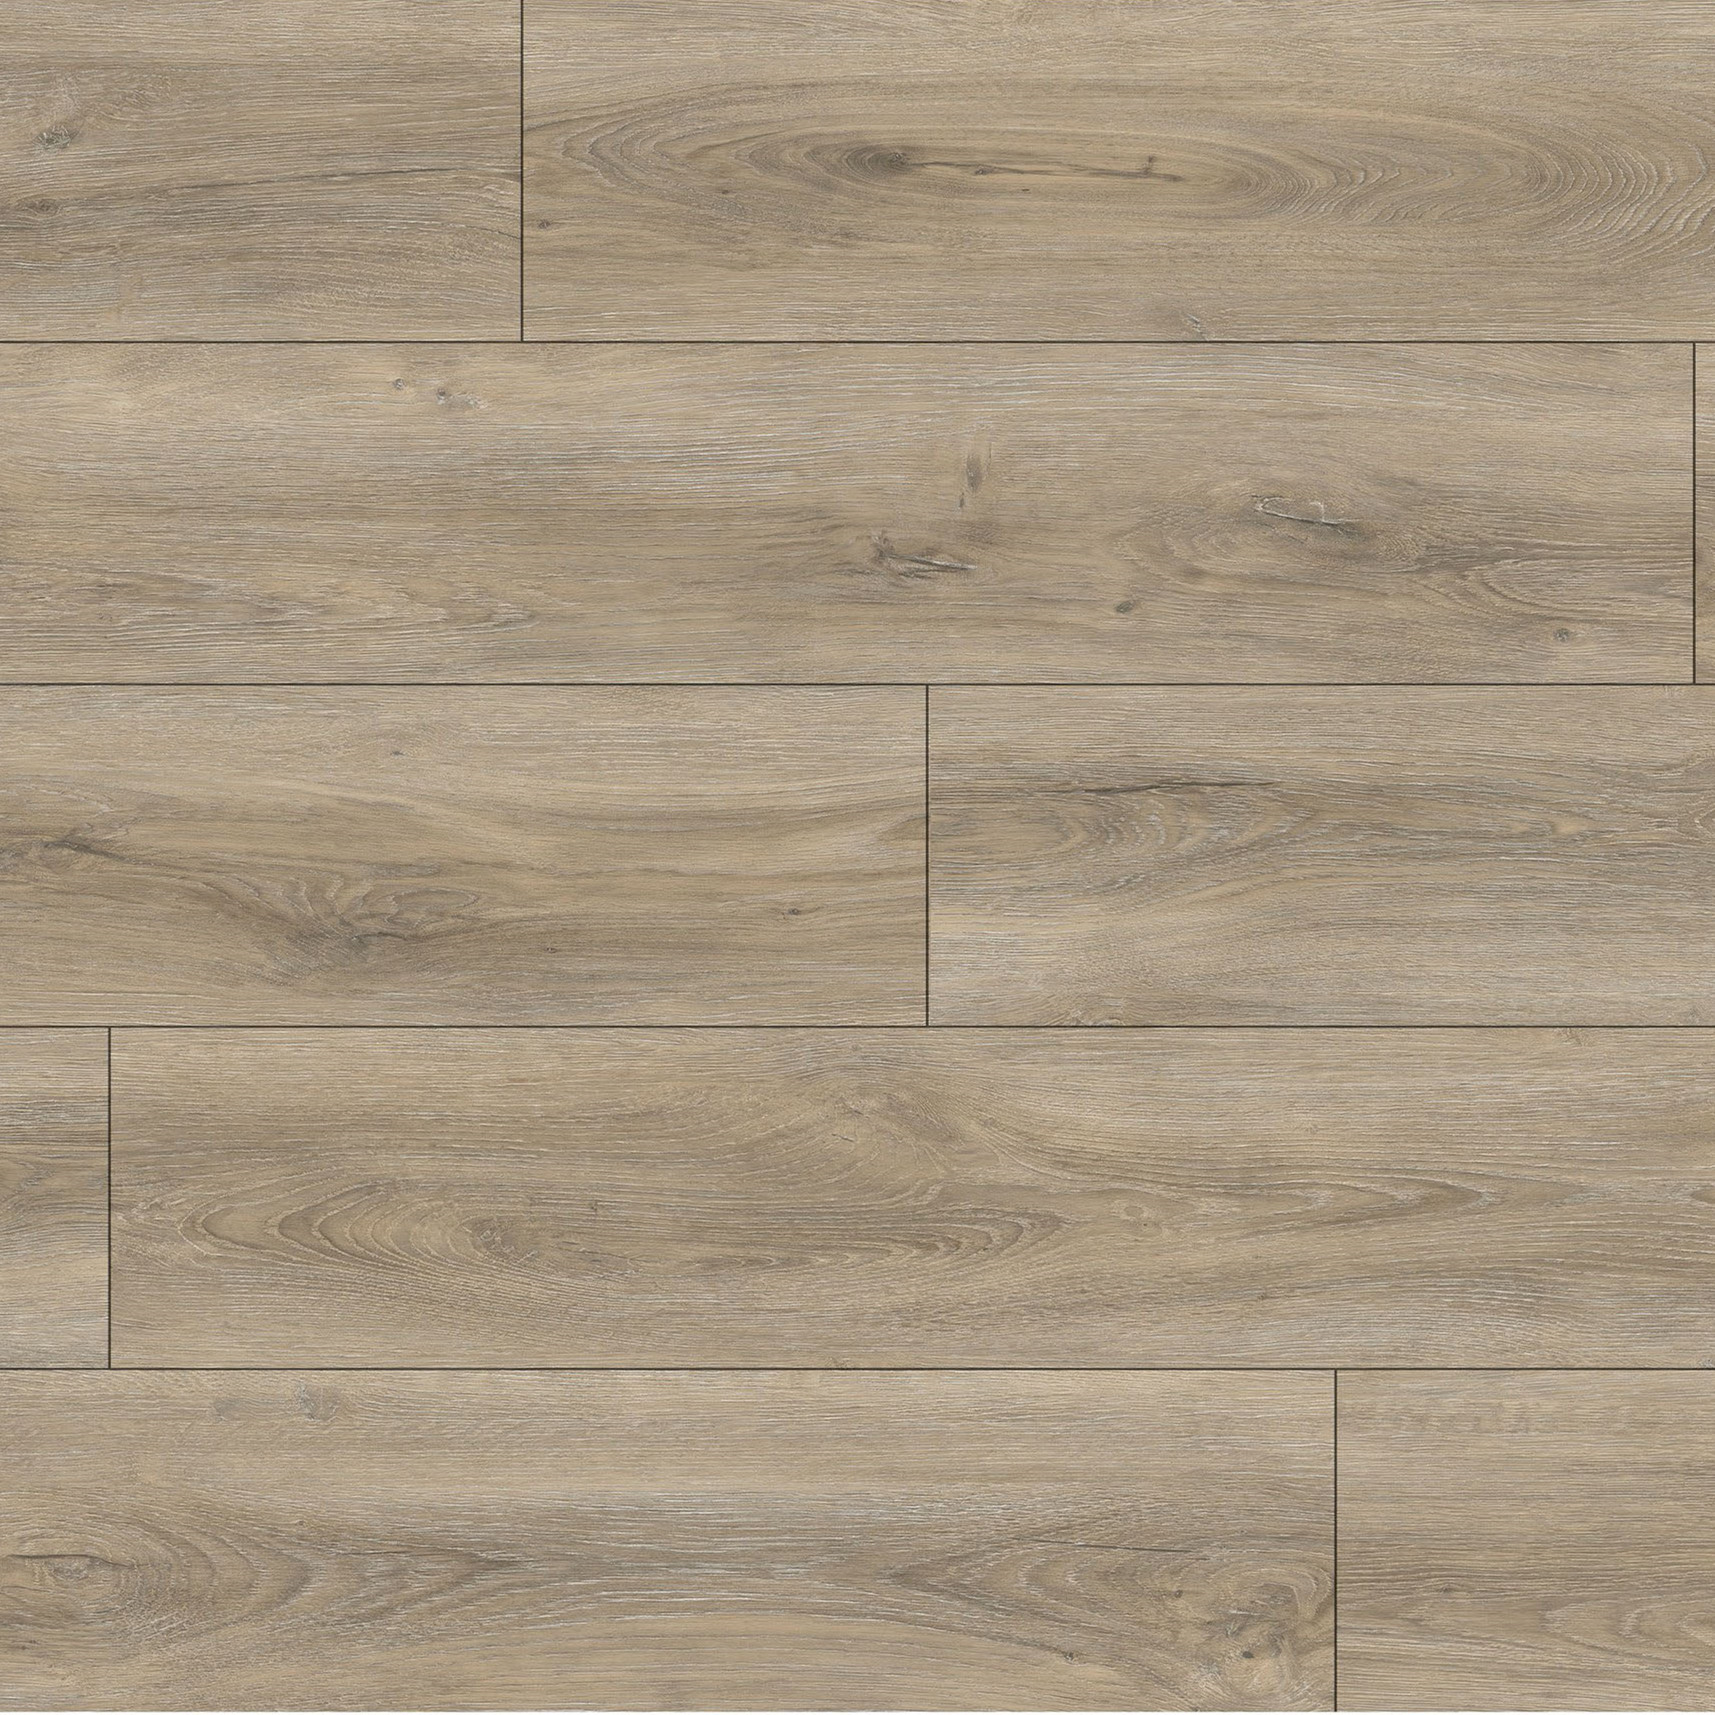 Discountable price Wood Effect Flooring -
 Kangton Natural Oak SPC Flooring with Cheap Price – Kangton